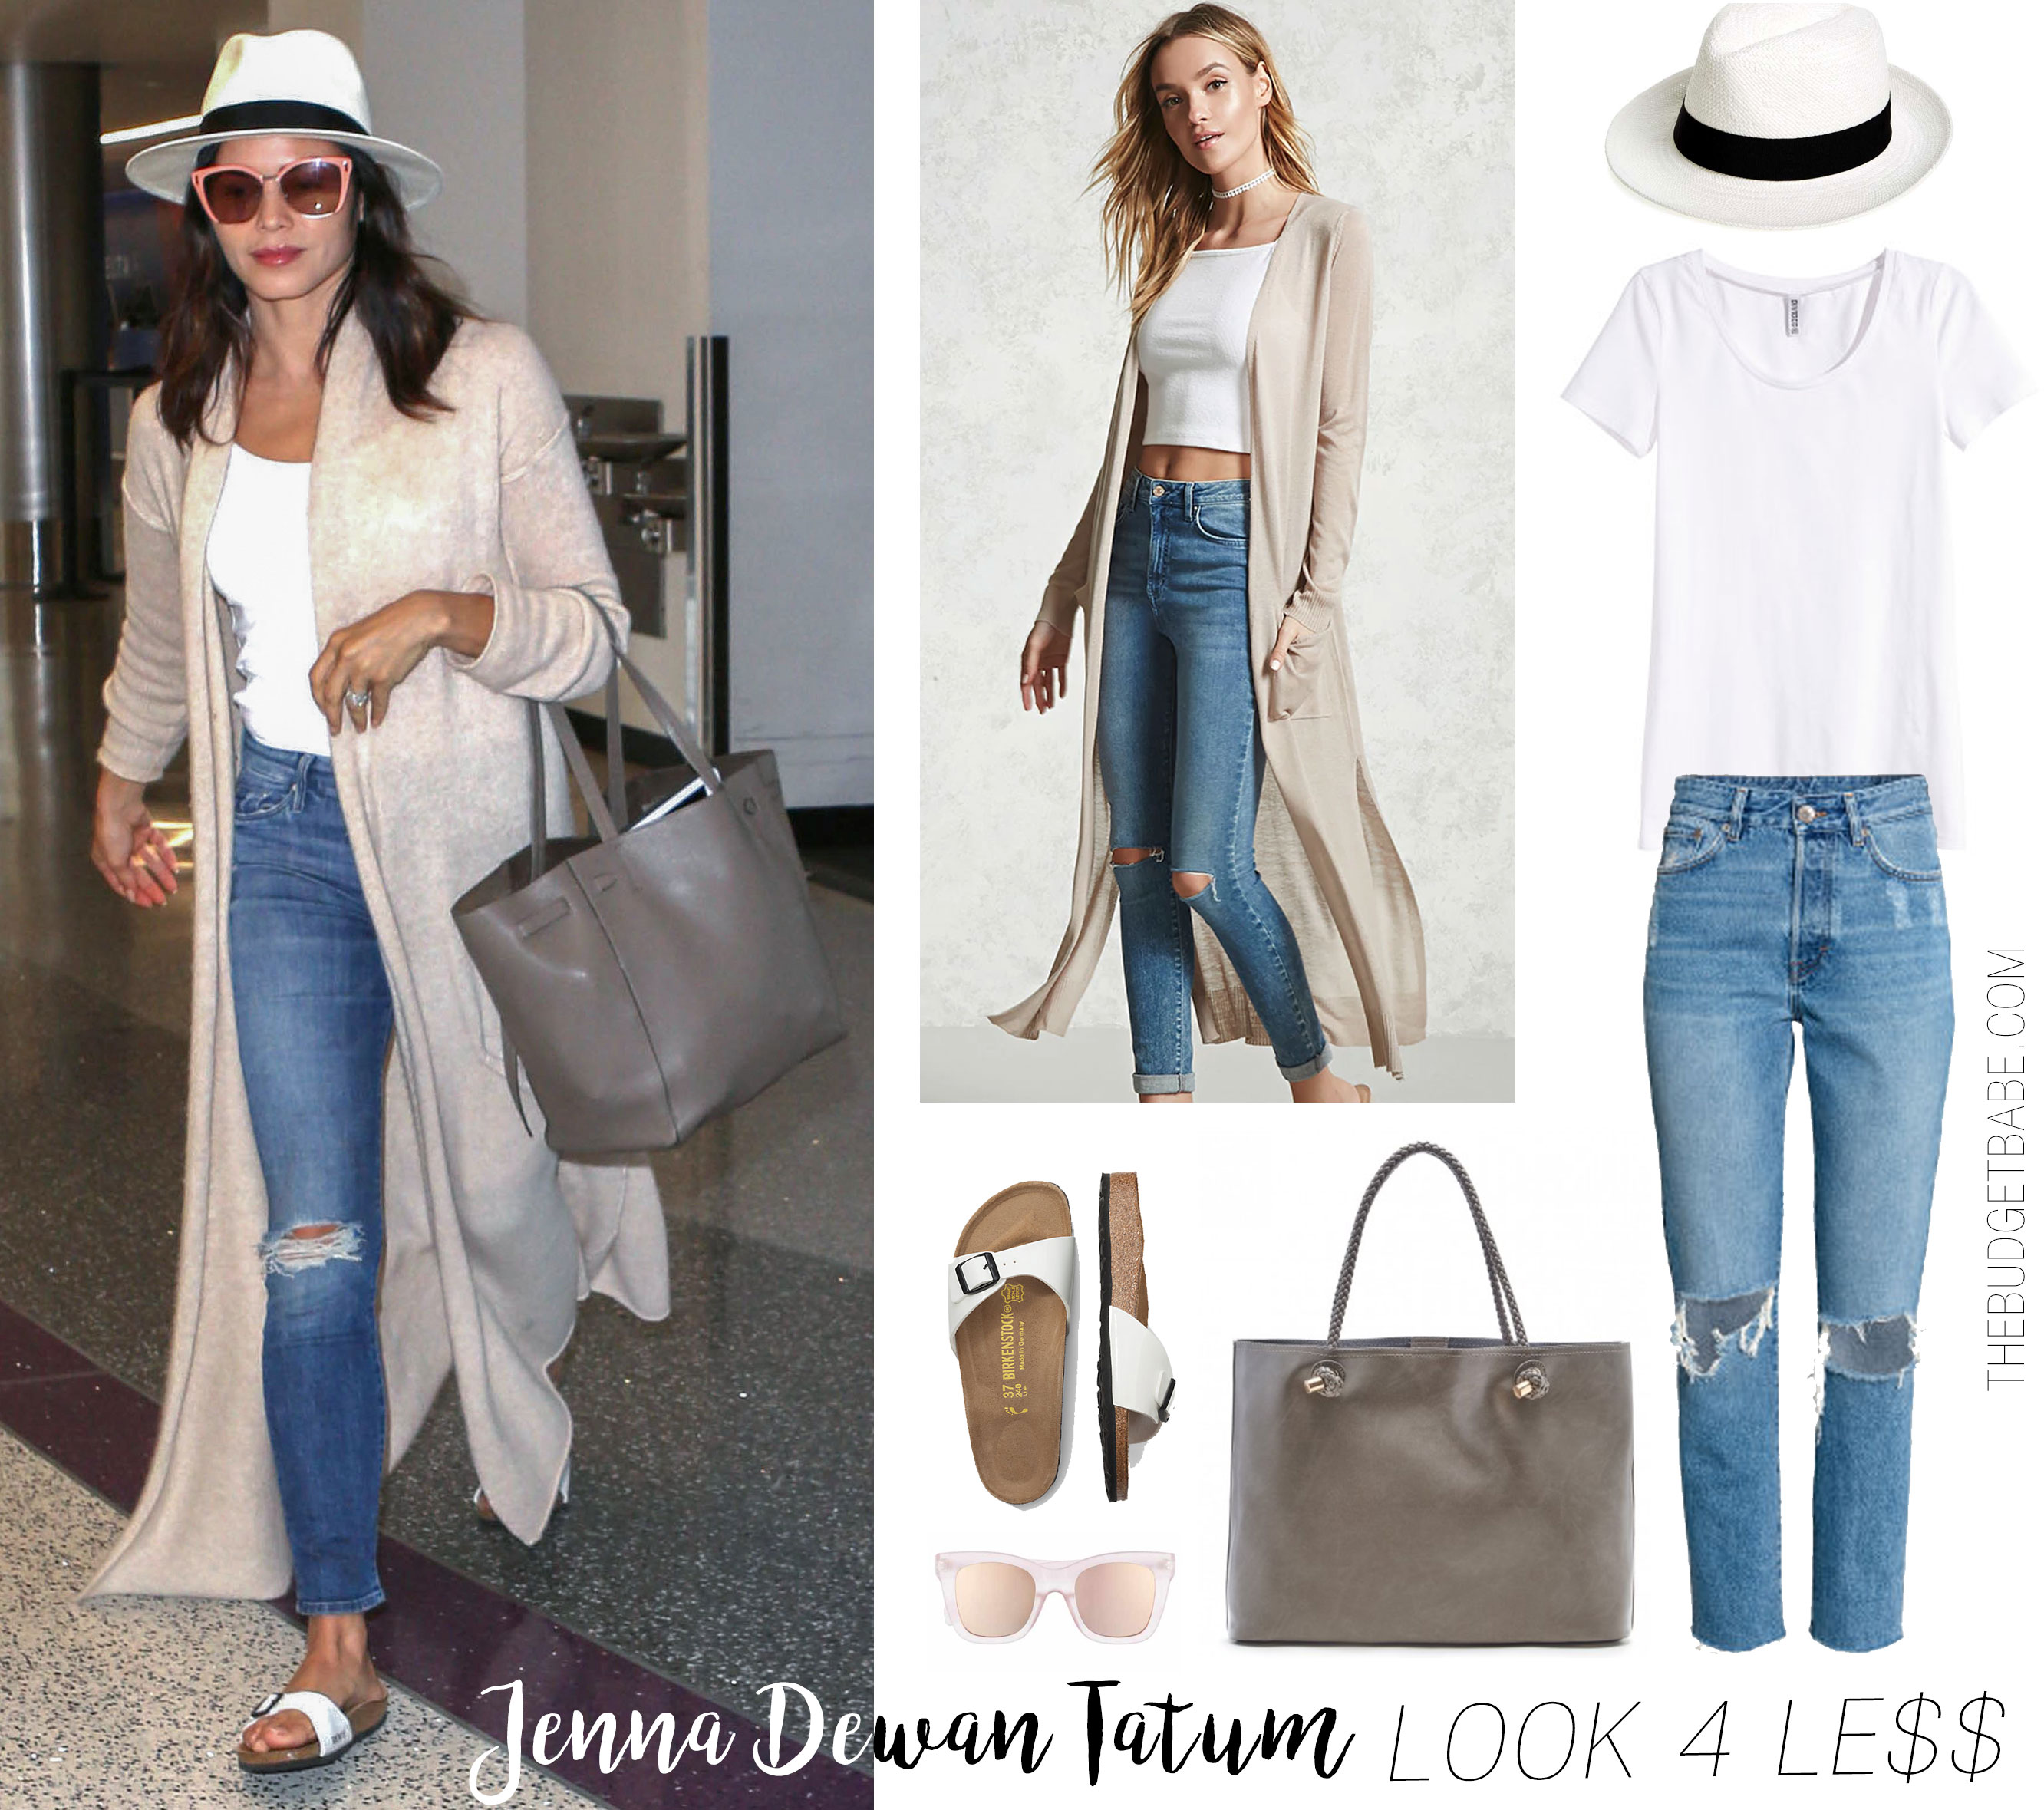 Jenna Dewan Tatum's duster and Birkenstocks look for less